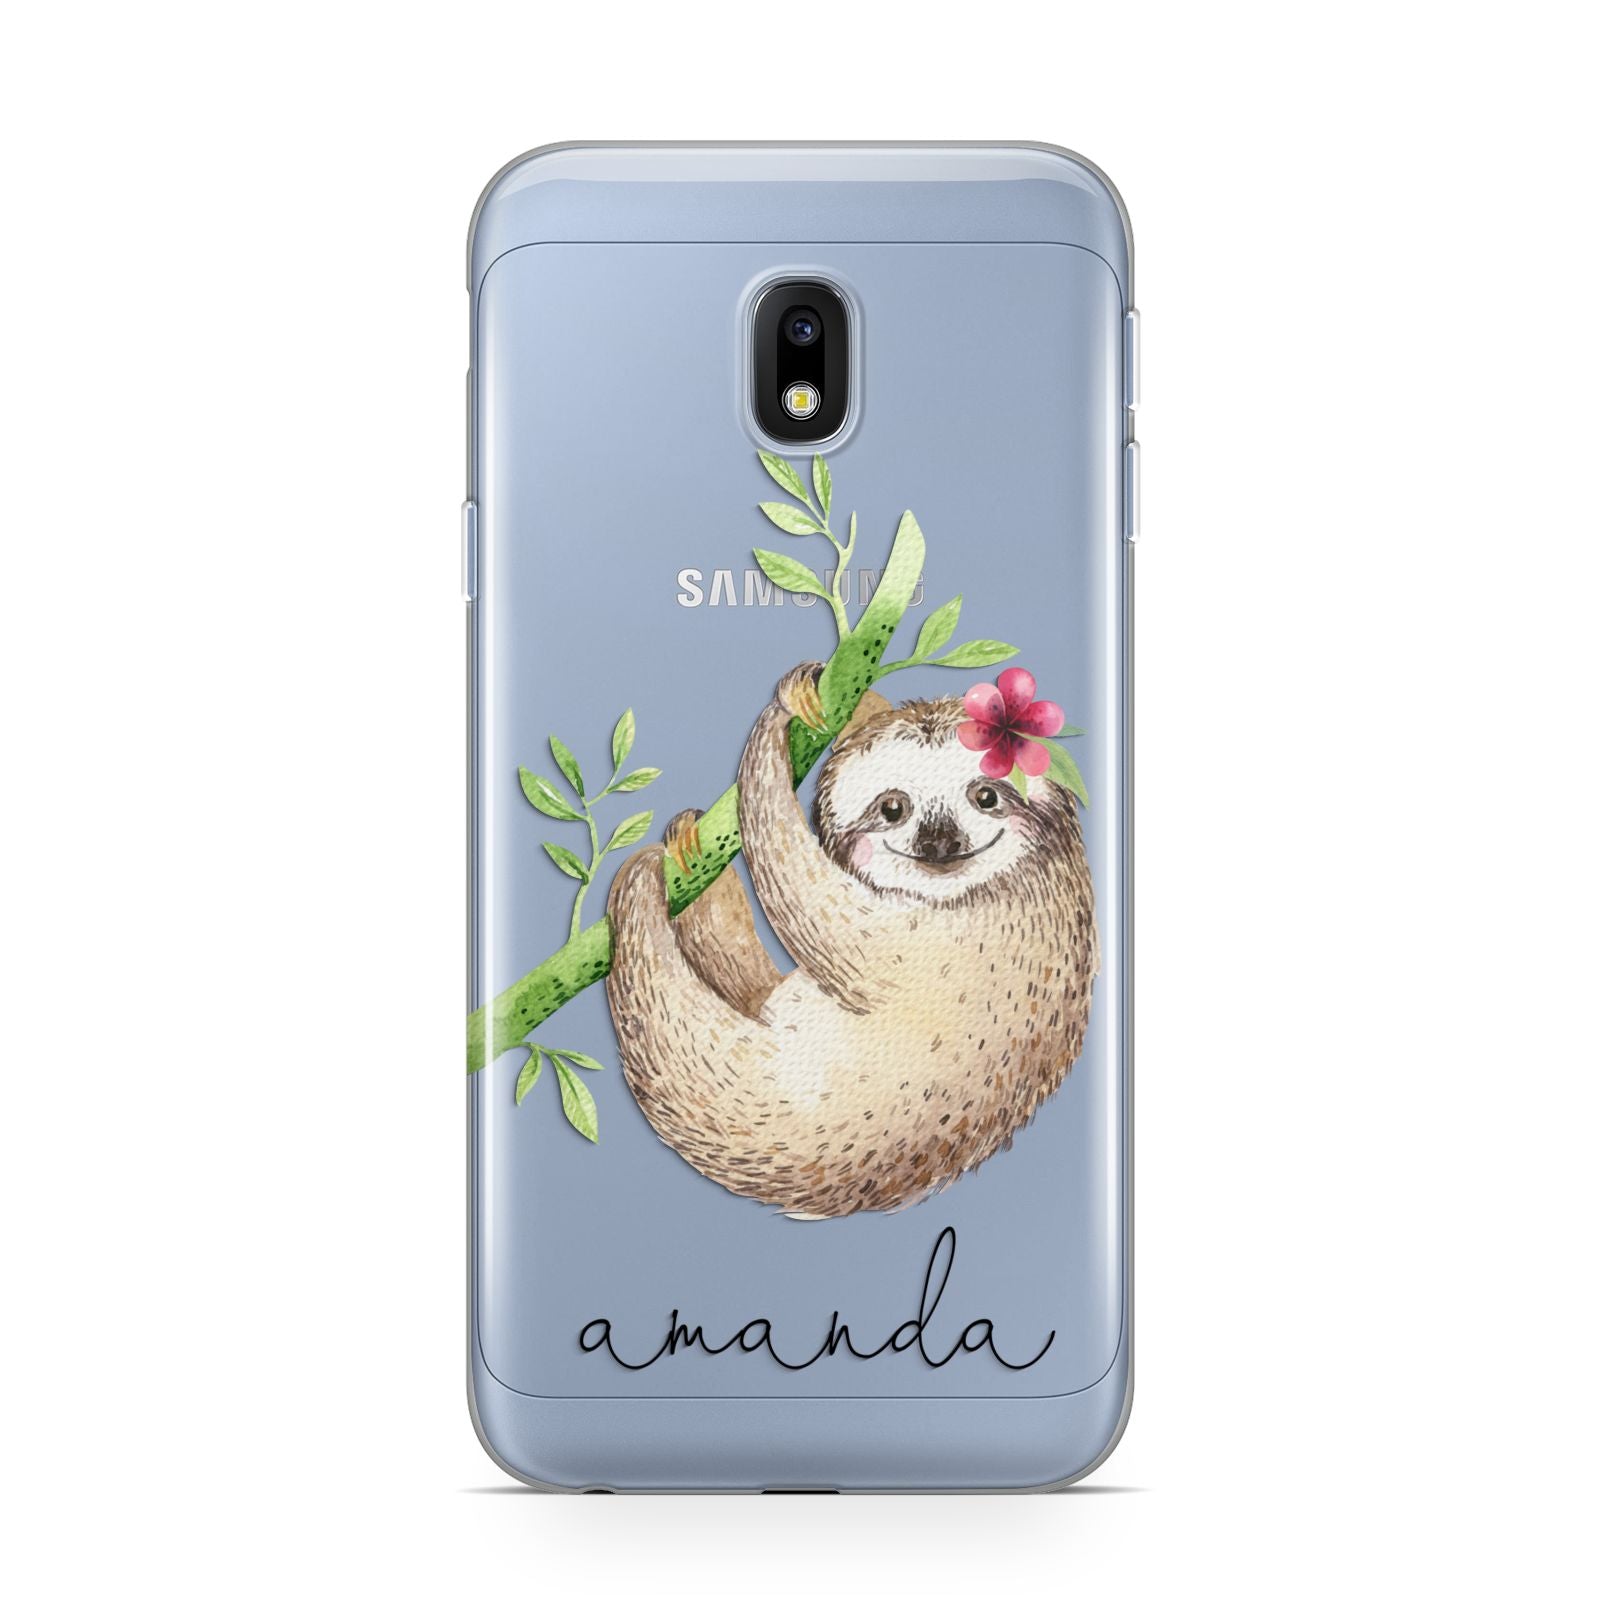 Personalised Sloth Samsung Galaxy J3 2017 Case